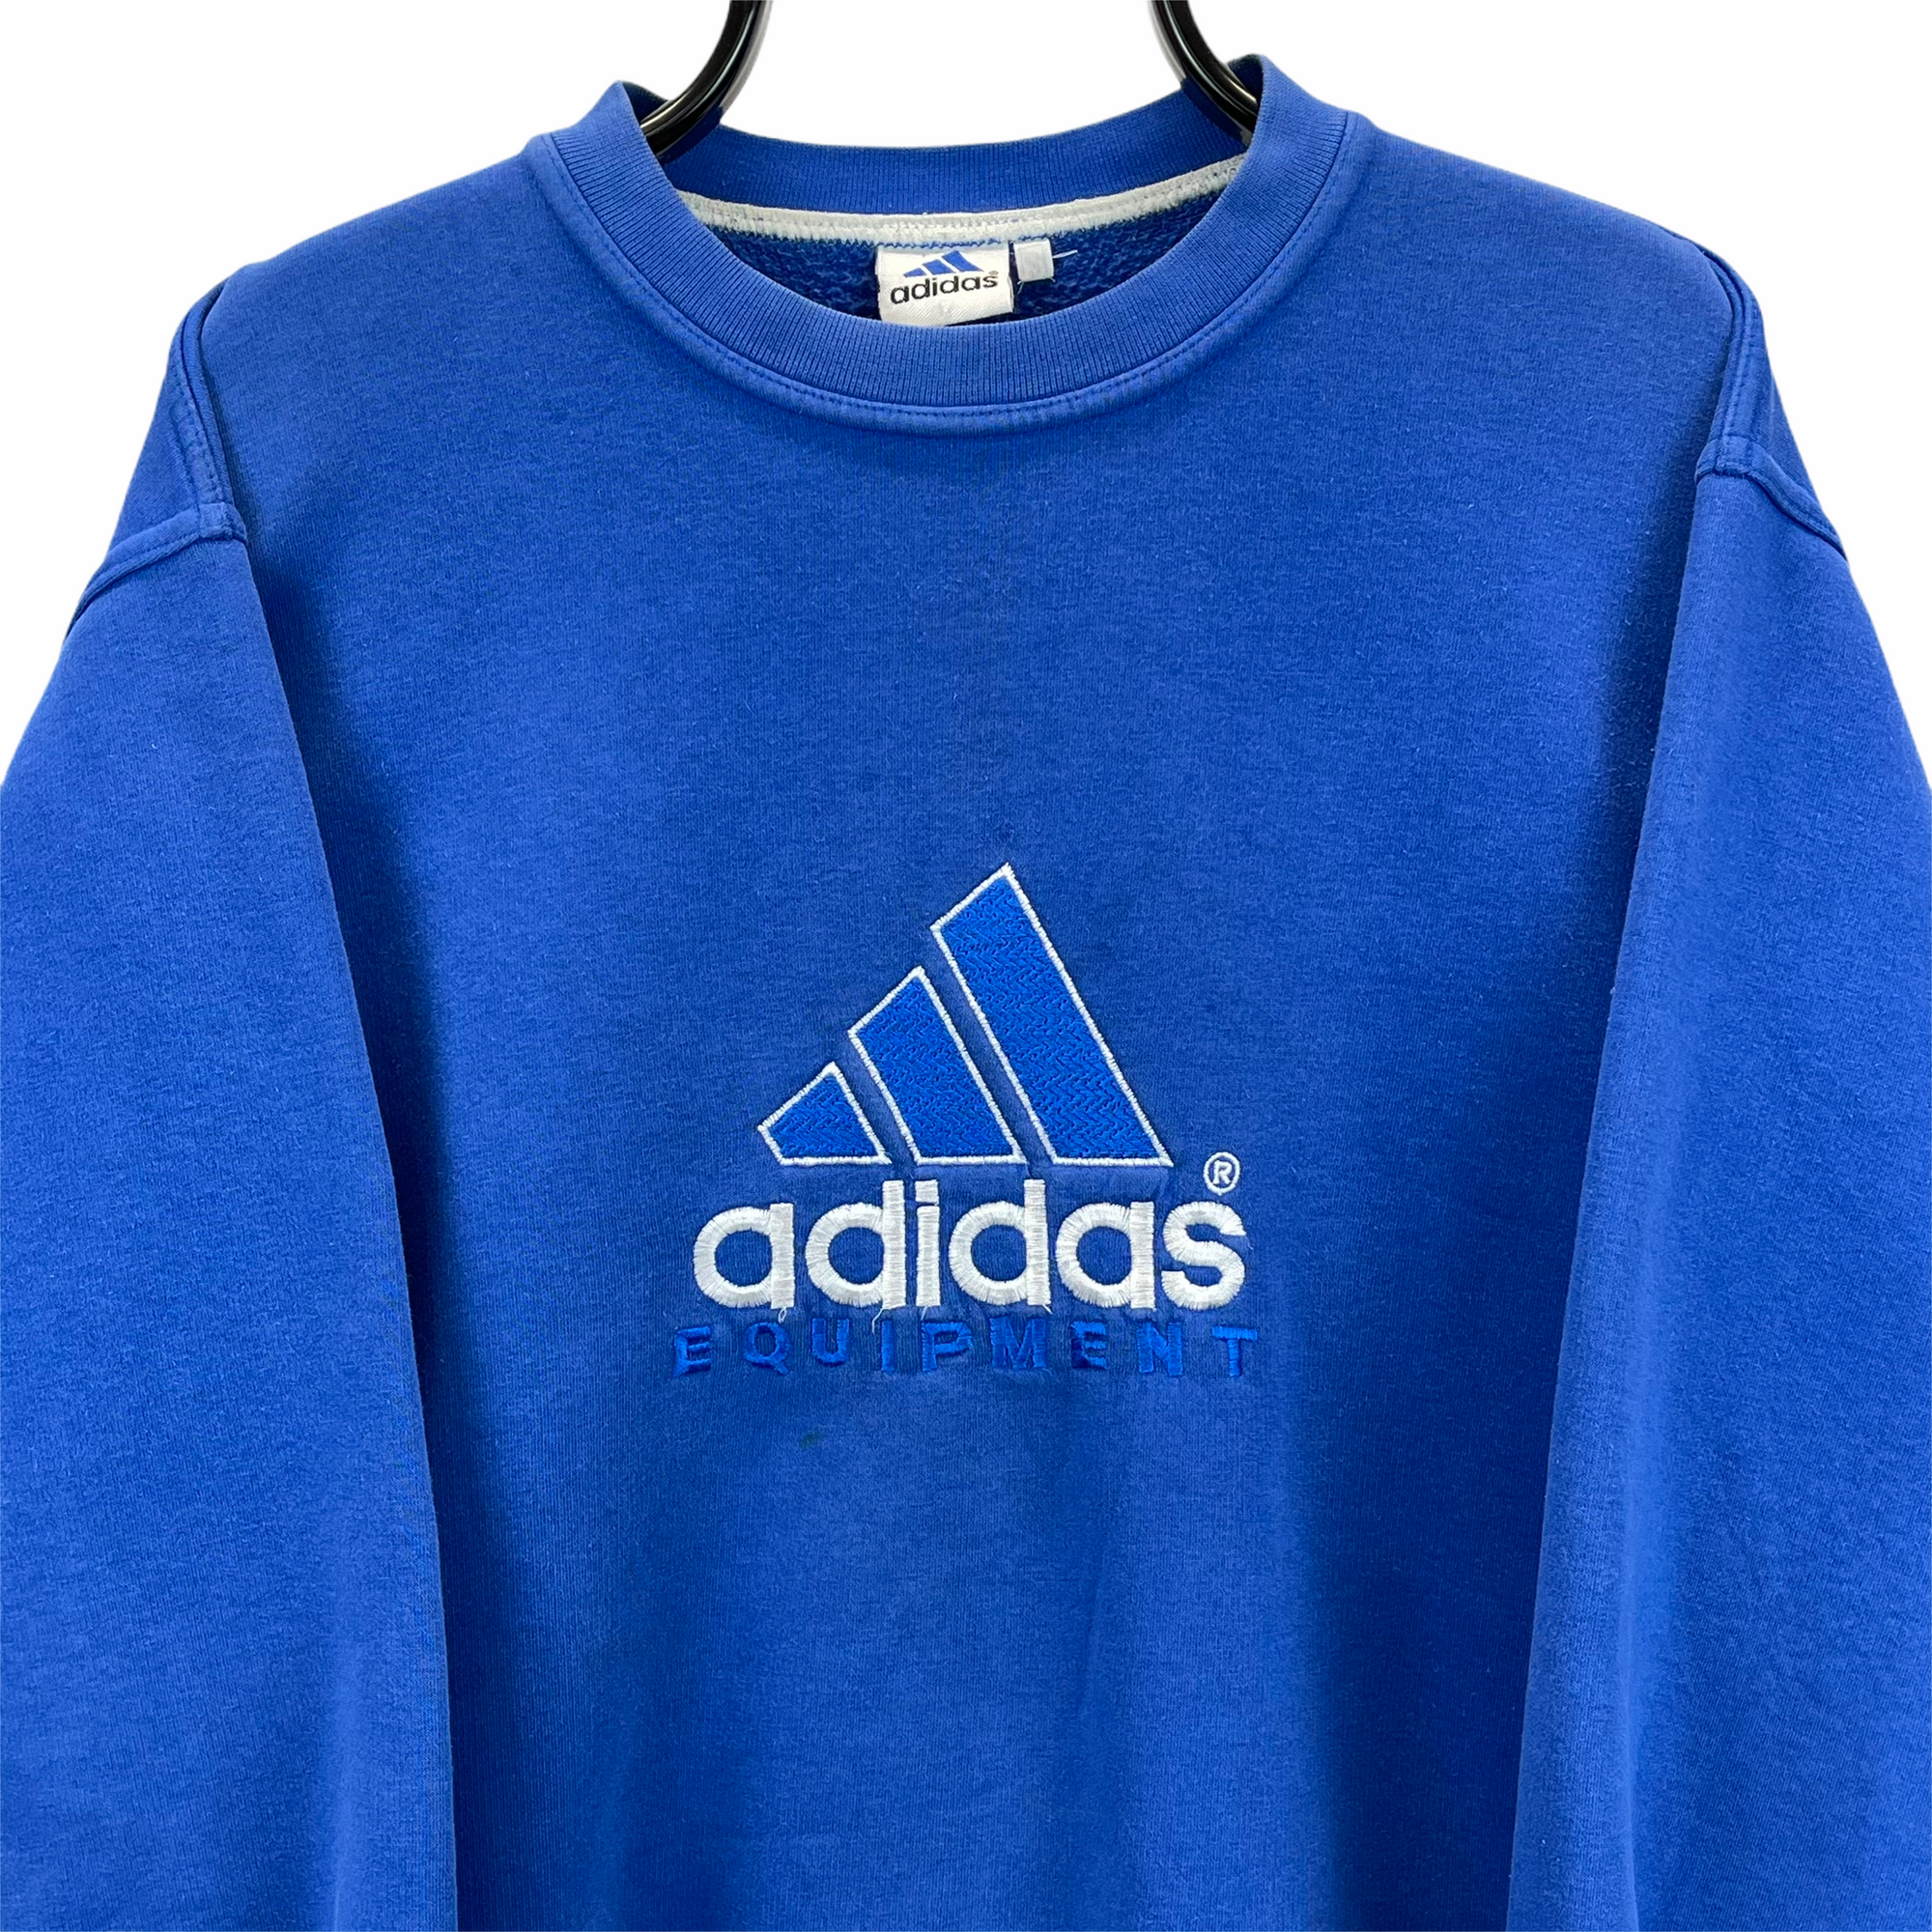 Vintage 90s Adidas Equipment Spellout Sweatshirt in Blue - Men's Medium/Women's Large